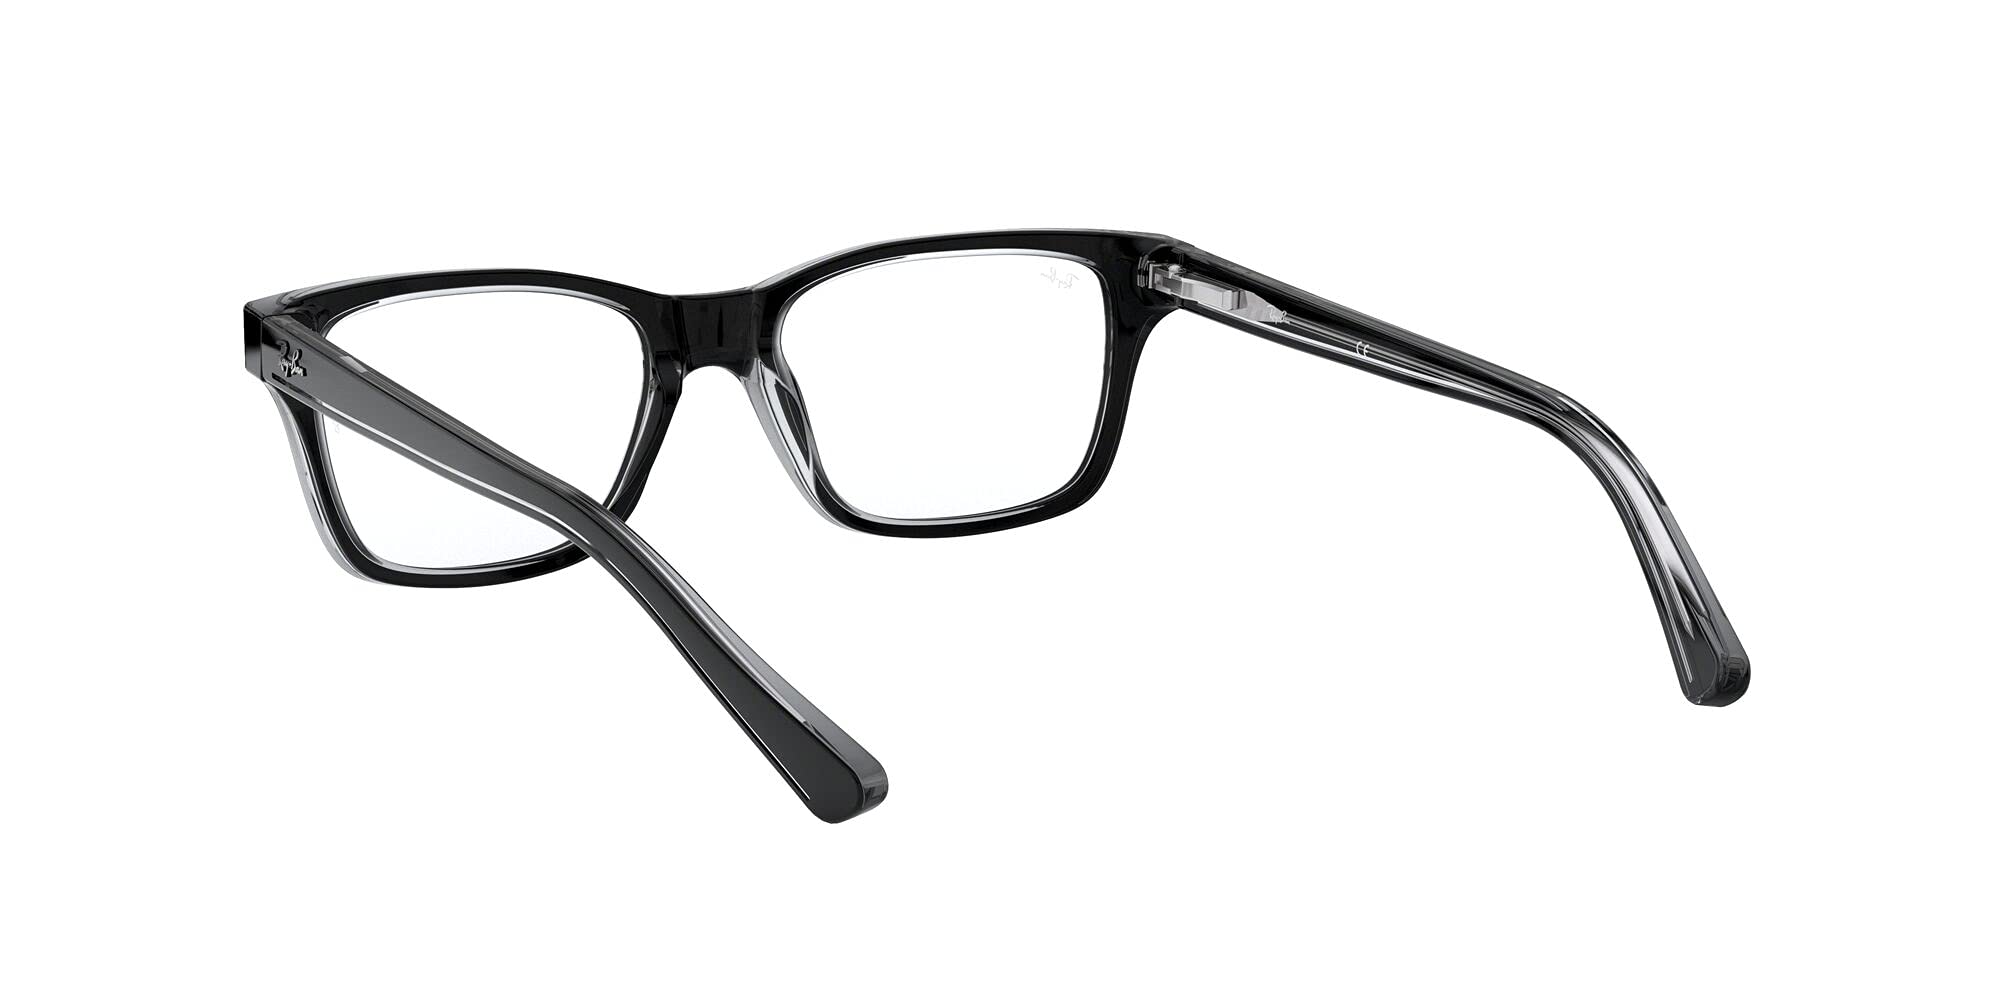 Ray-Ban Kids' Ry1536 Square Prescription Eyeglass Frames